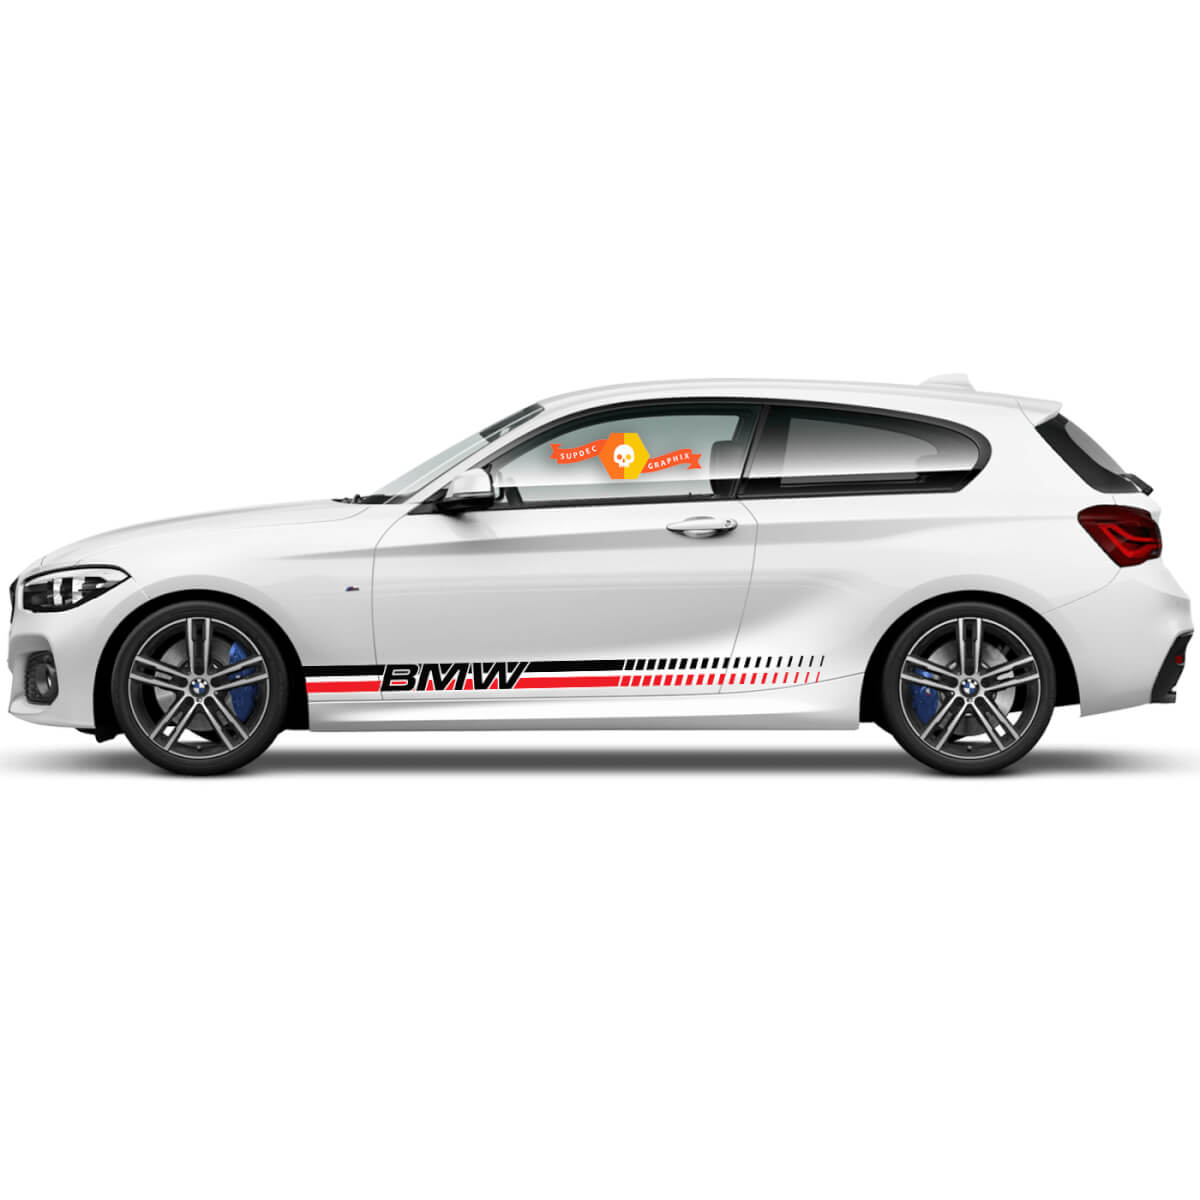 2x Decalcomanie in vinile Adesivi grafici Laterale BMW 1 Series 2015 Rocker Panel Racing Style Nuovo